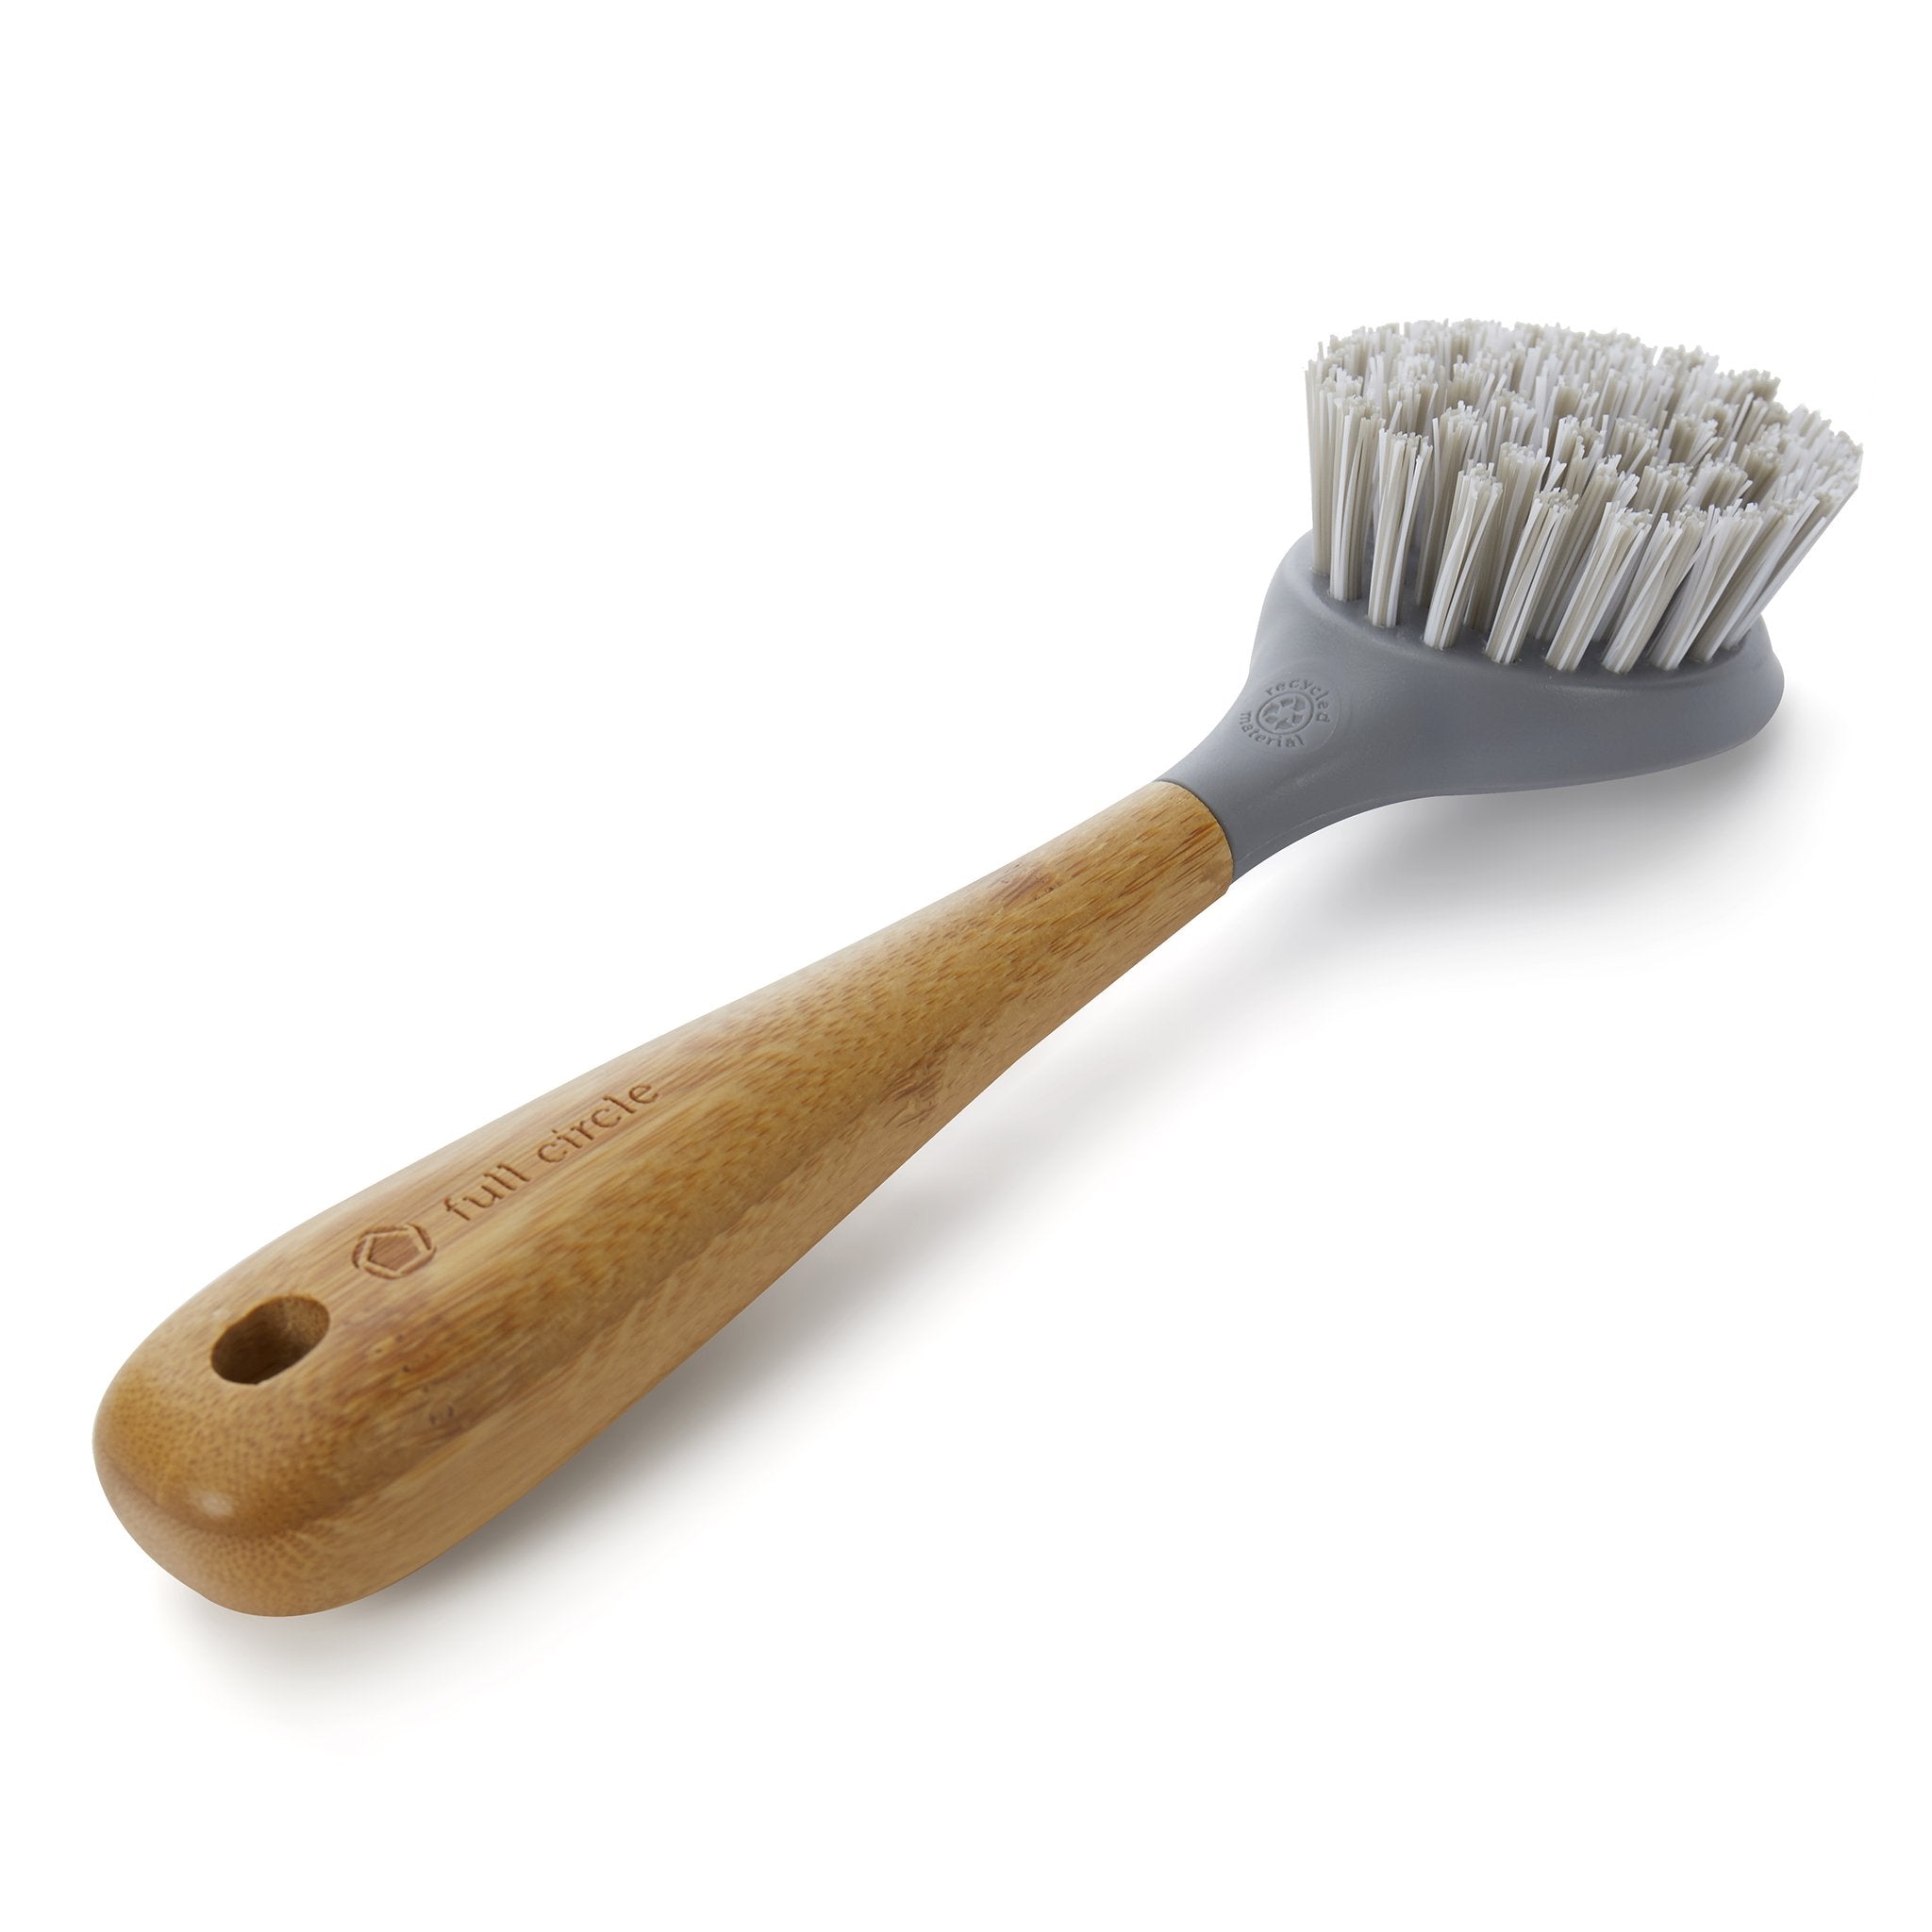 Crisbee Scrub Brush | Cast Iron Cleaner, etc.